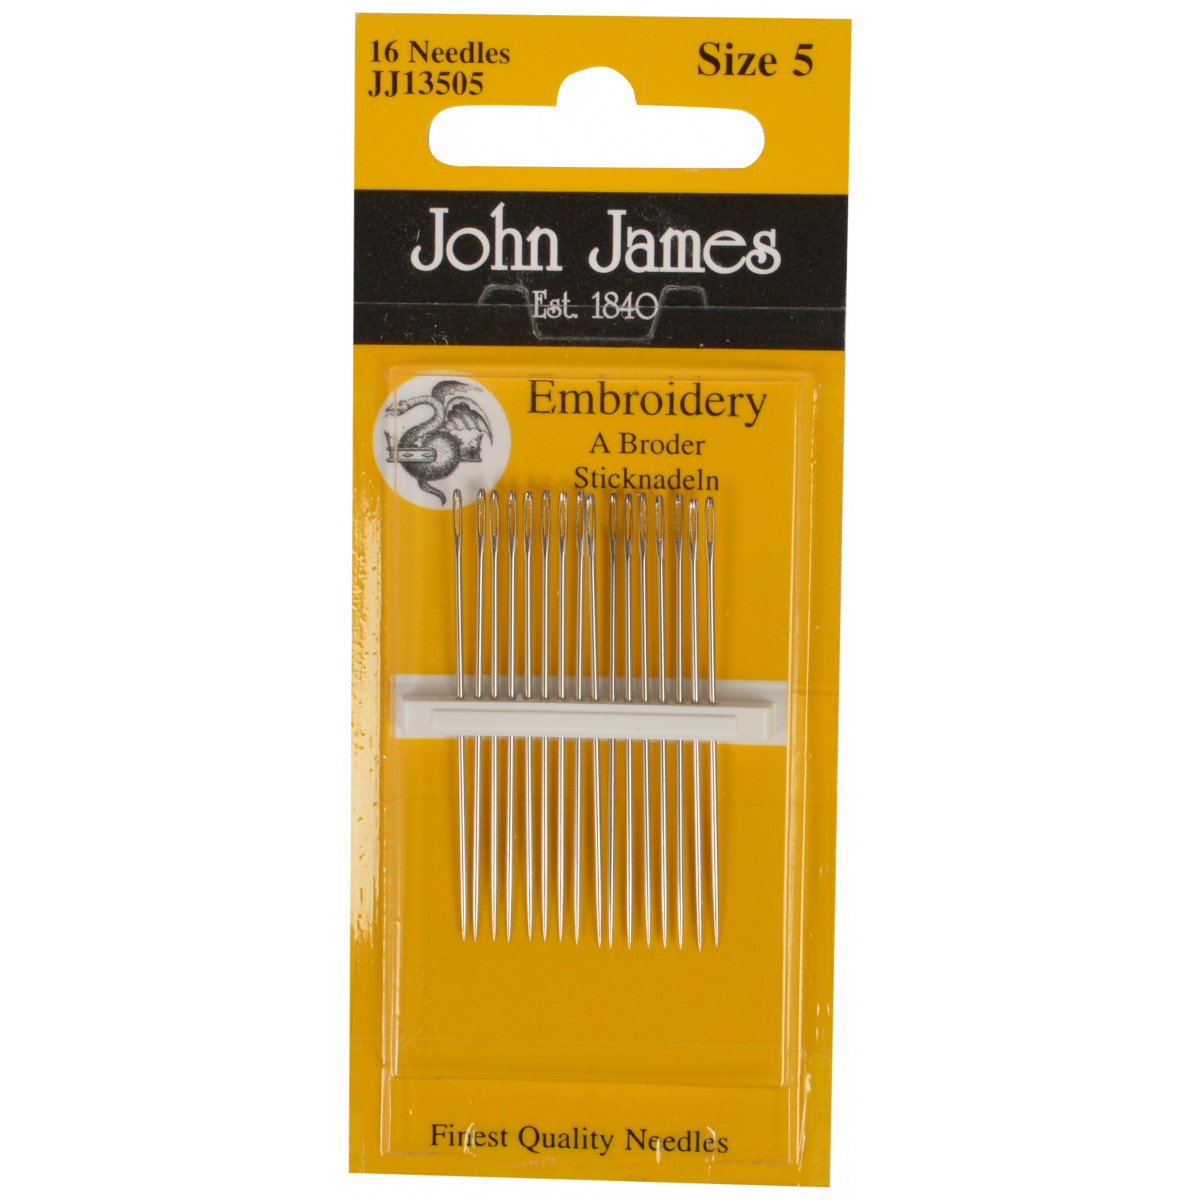 John James - Emroidery size 5 - 16 needles